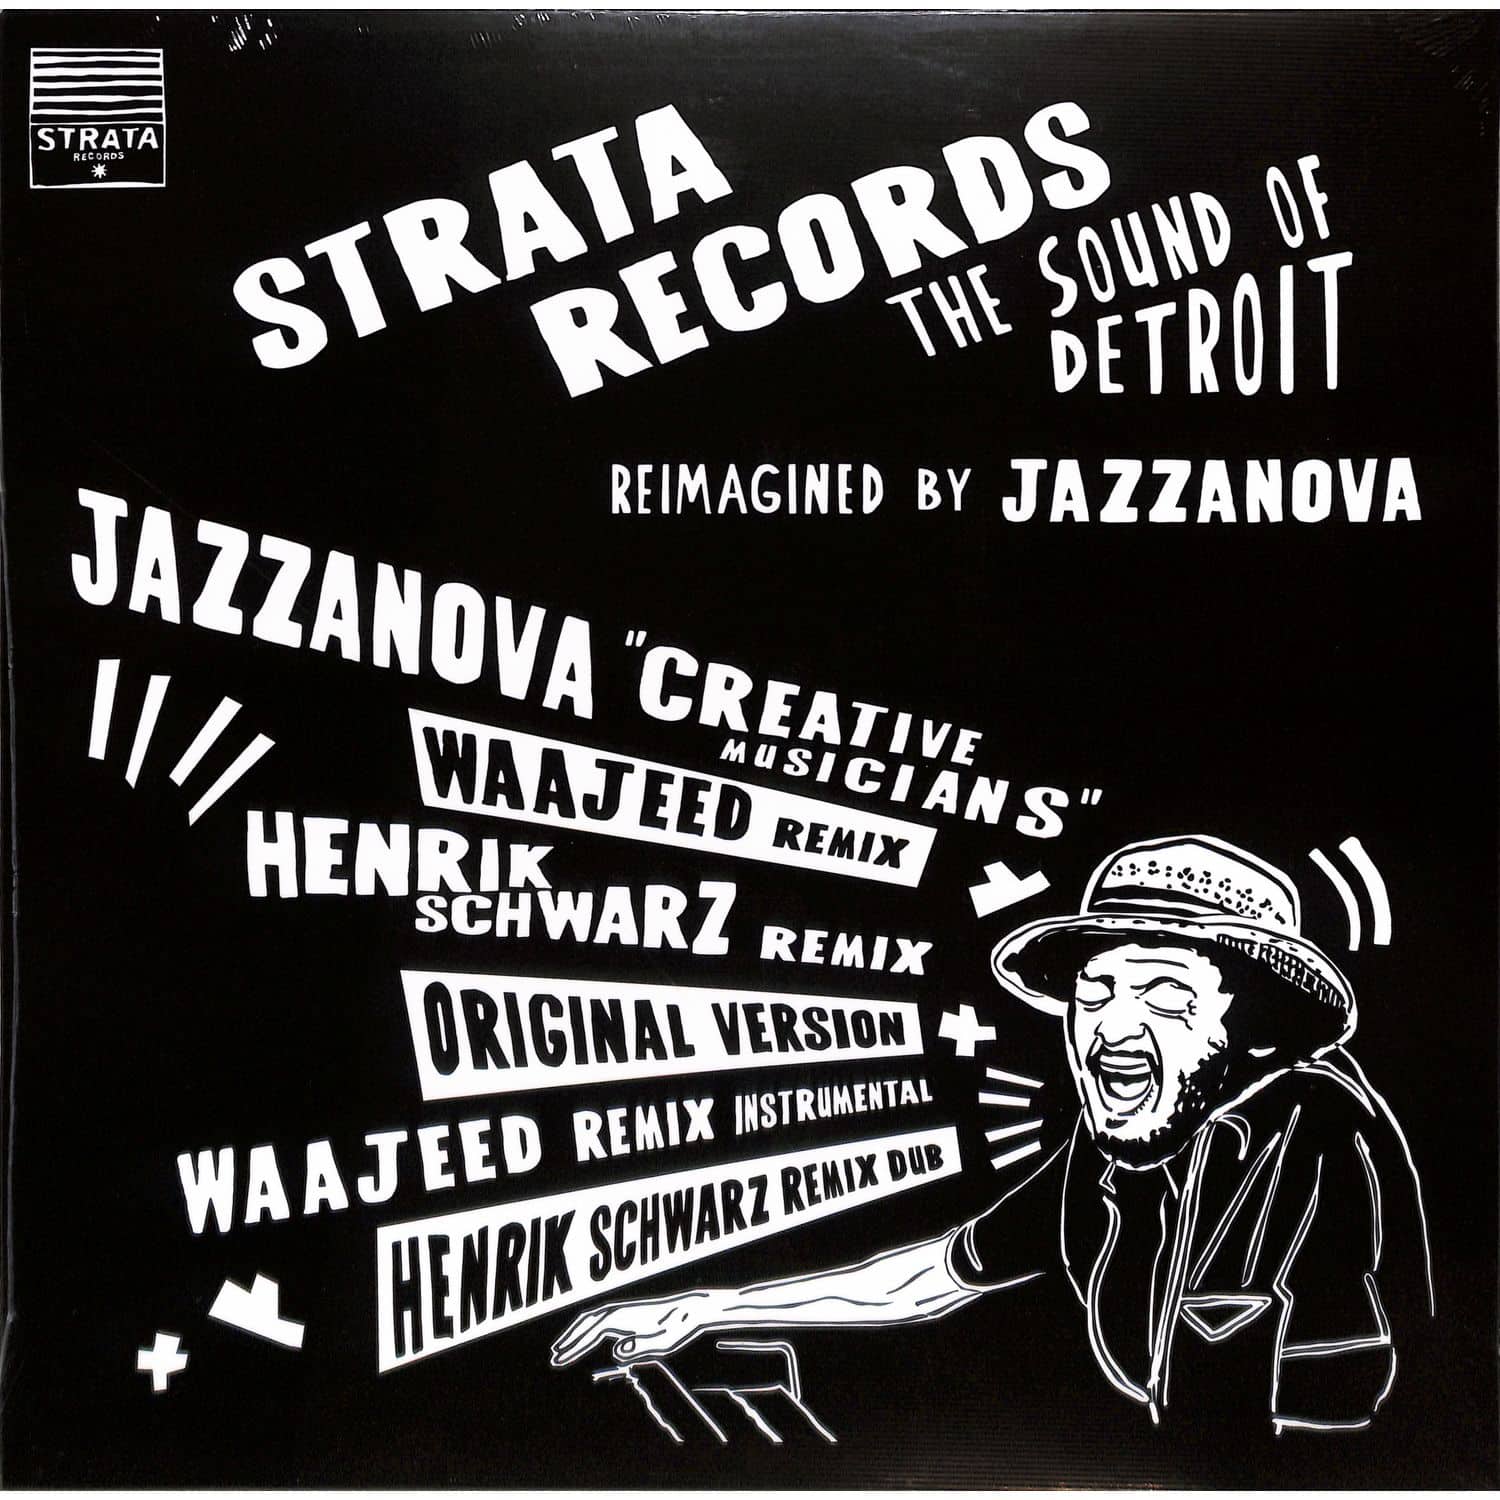 Jazzanova - CREATIVE MUSICIANS 